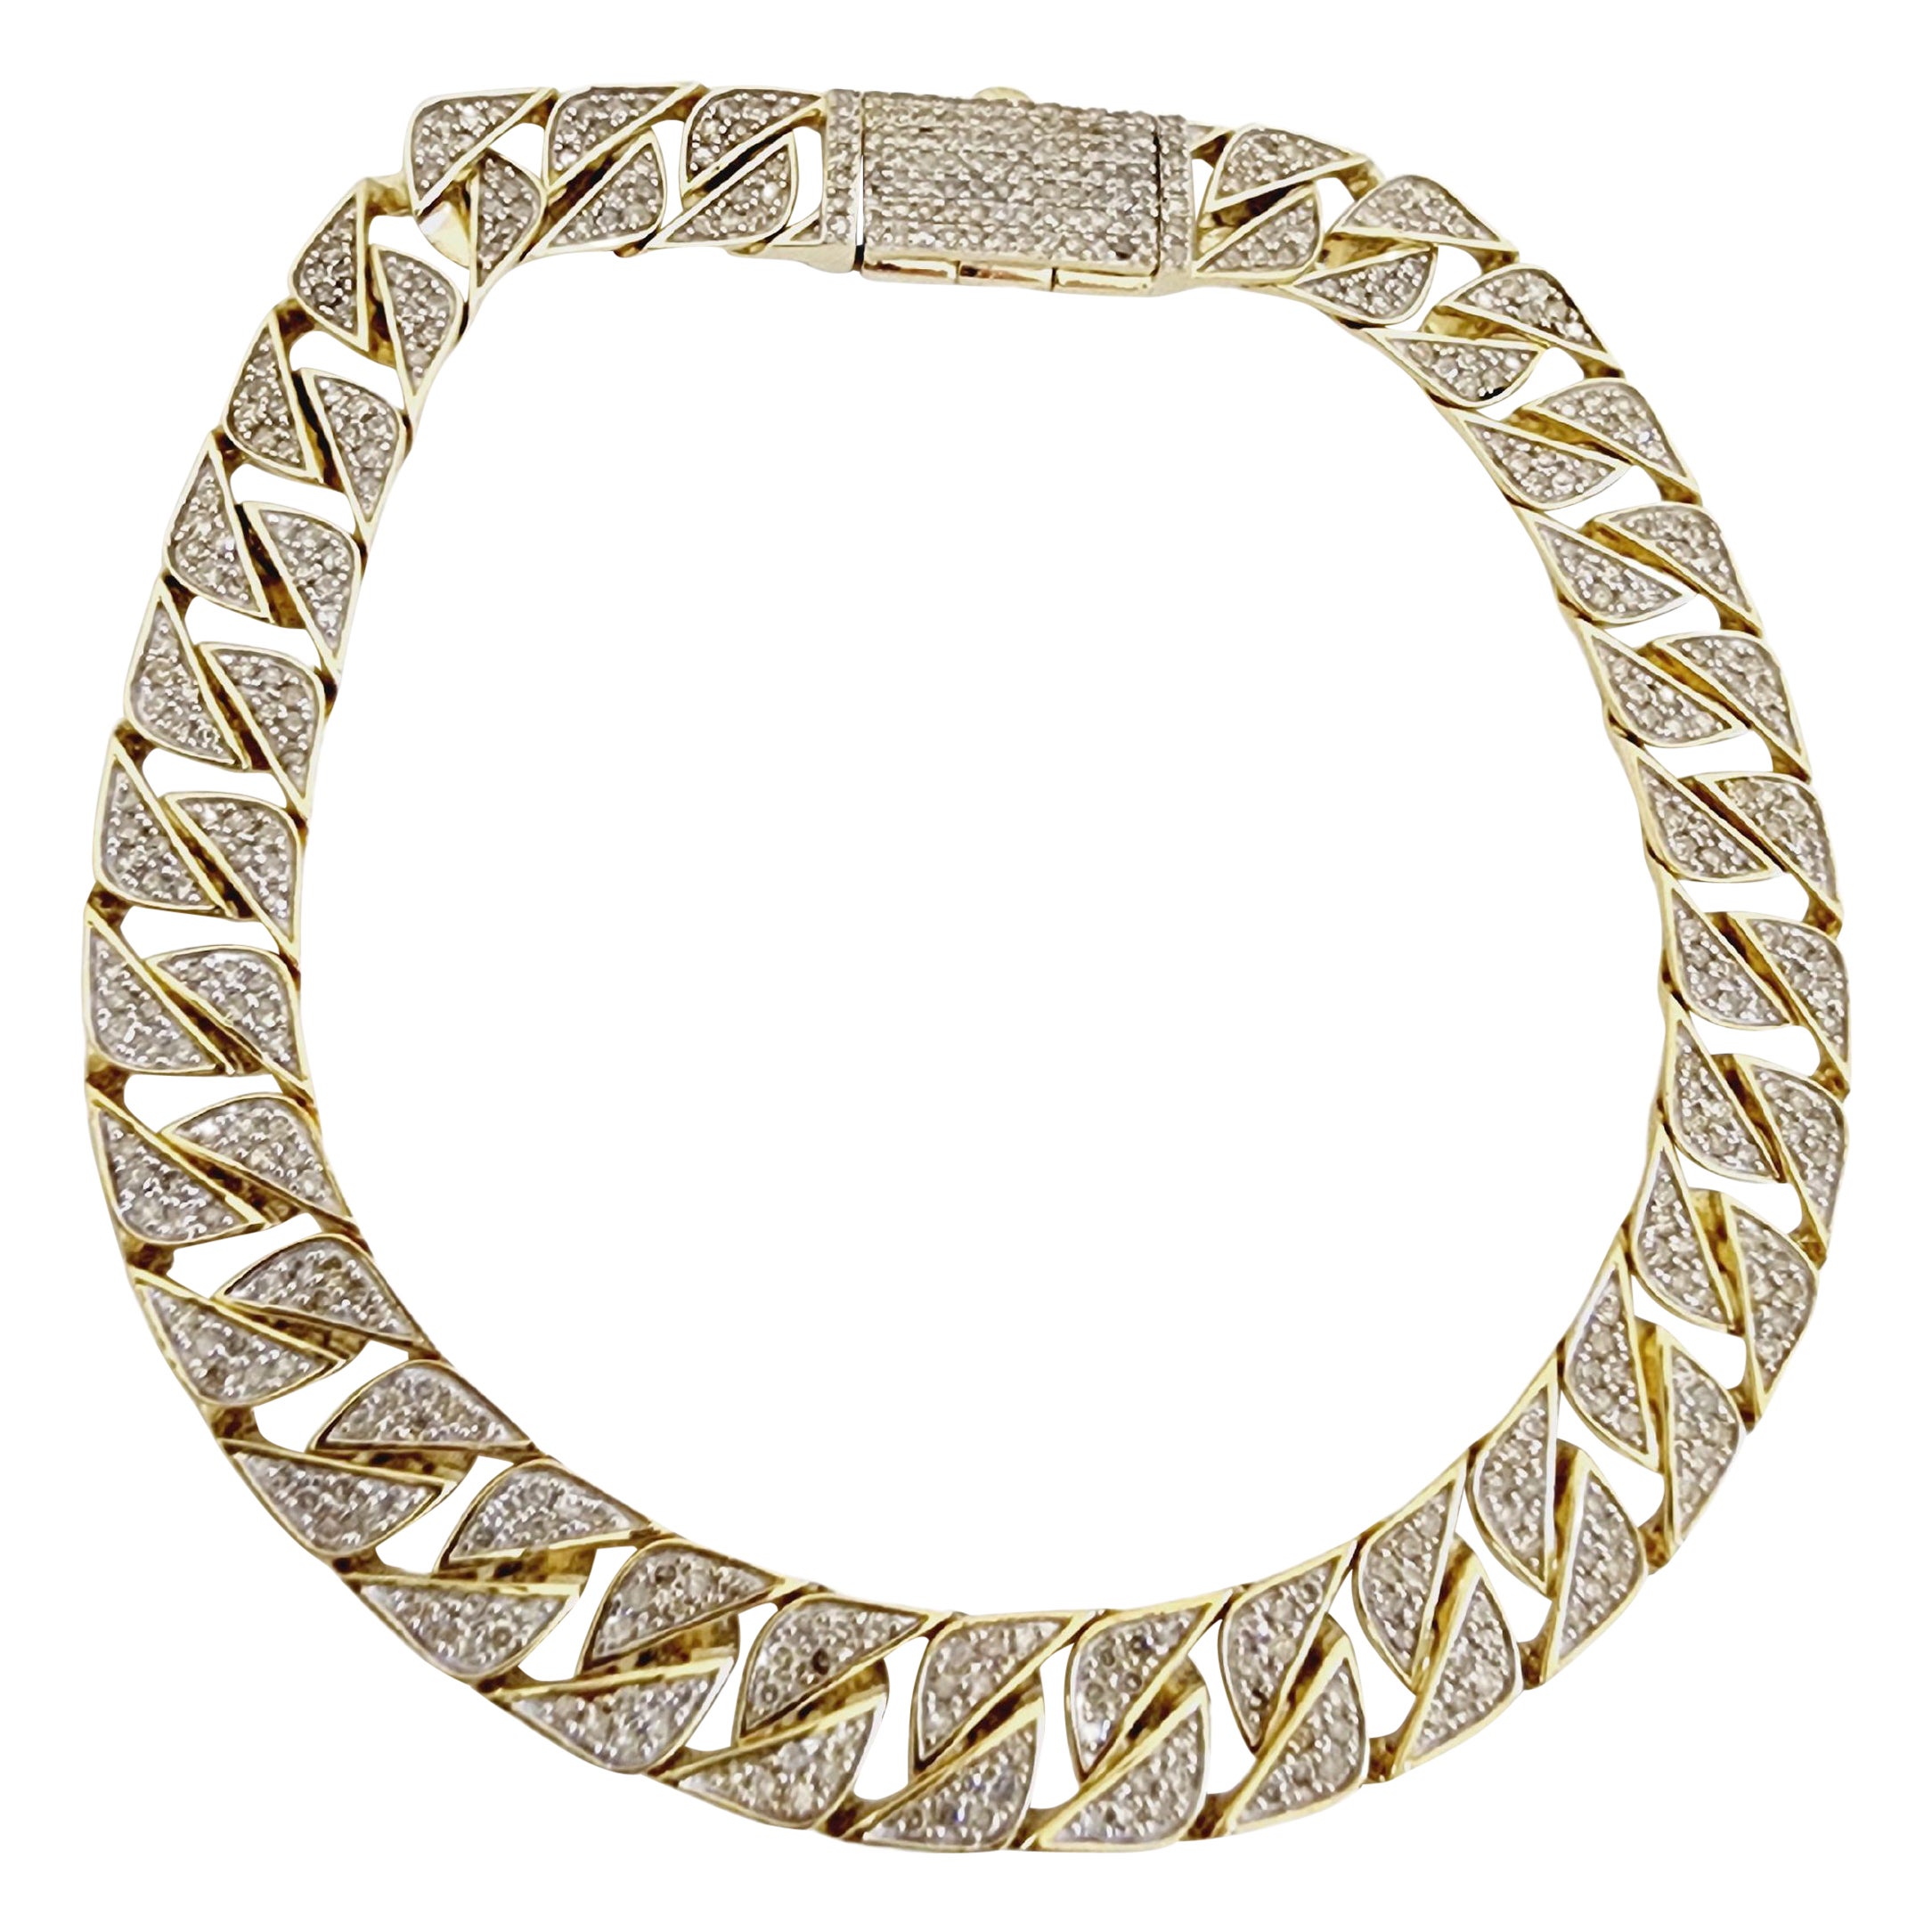 Buy Spirali Rope Italian 10K Yellow Gold Bracelet (7.00-8.00In) 3.50 Grams  at ShopLC.